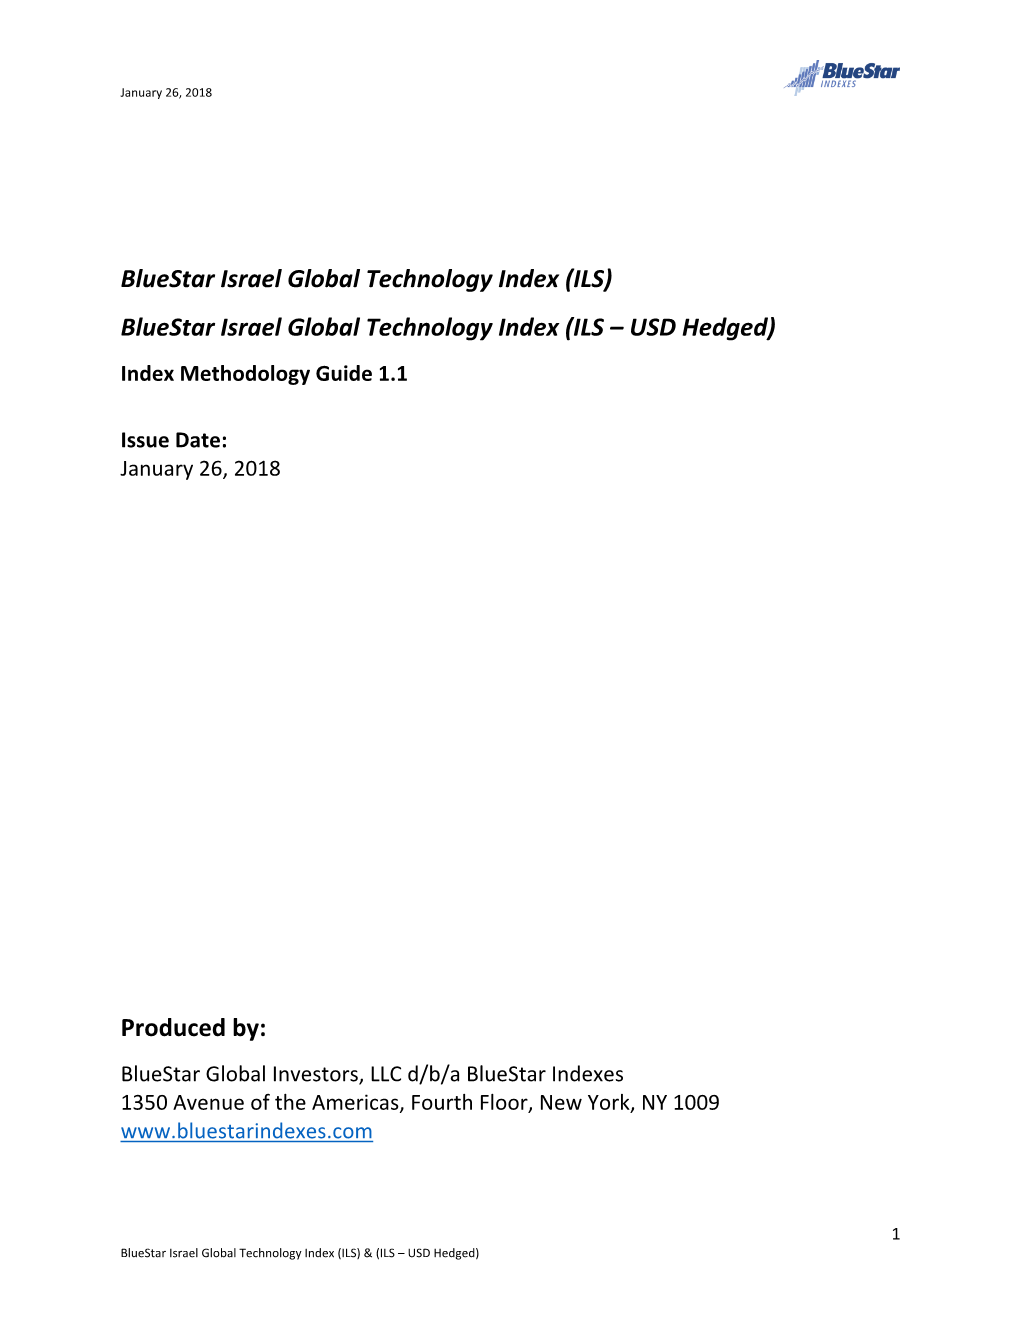 ILS – USD Hedged) Index Methodology Guide 1.1